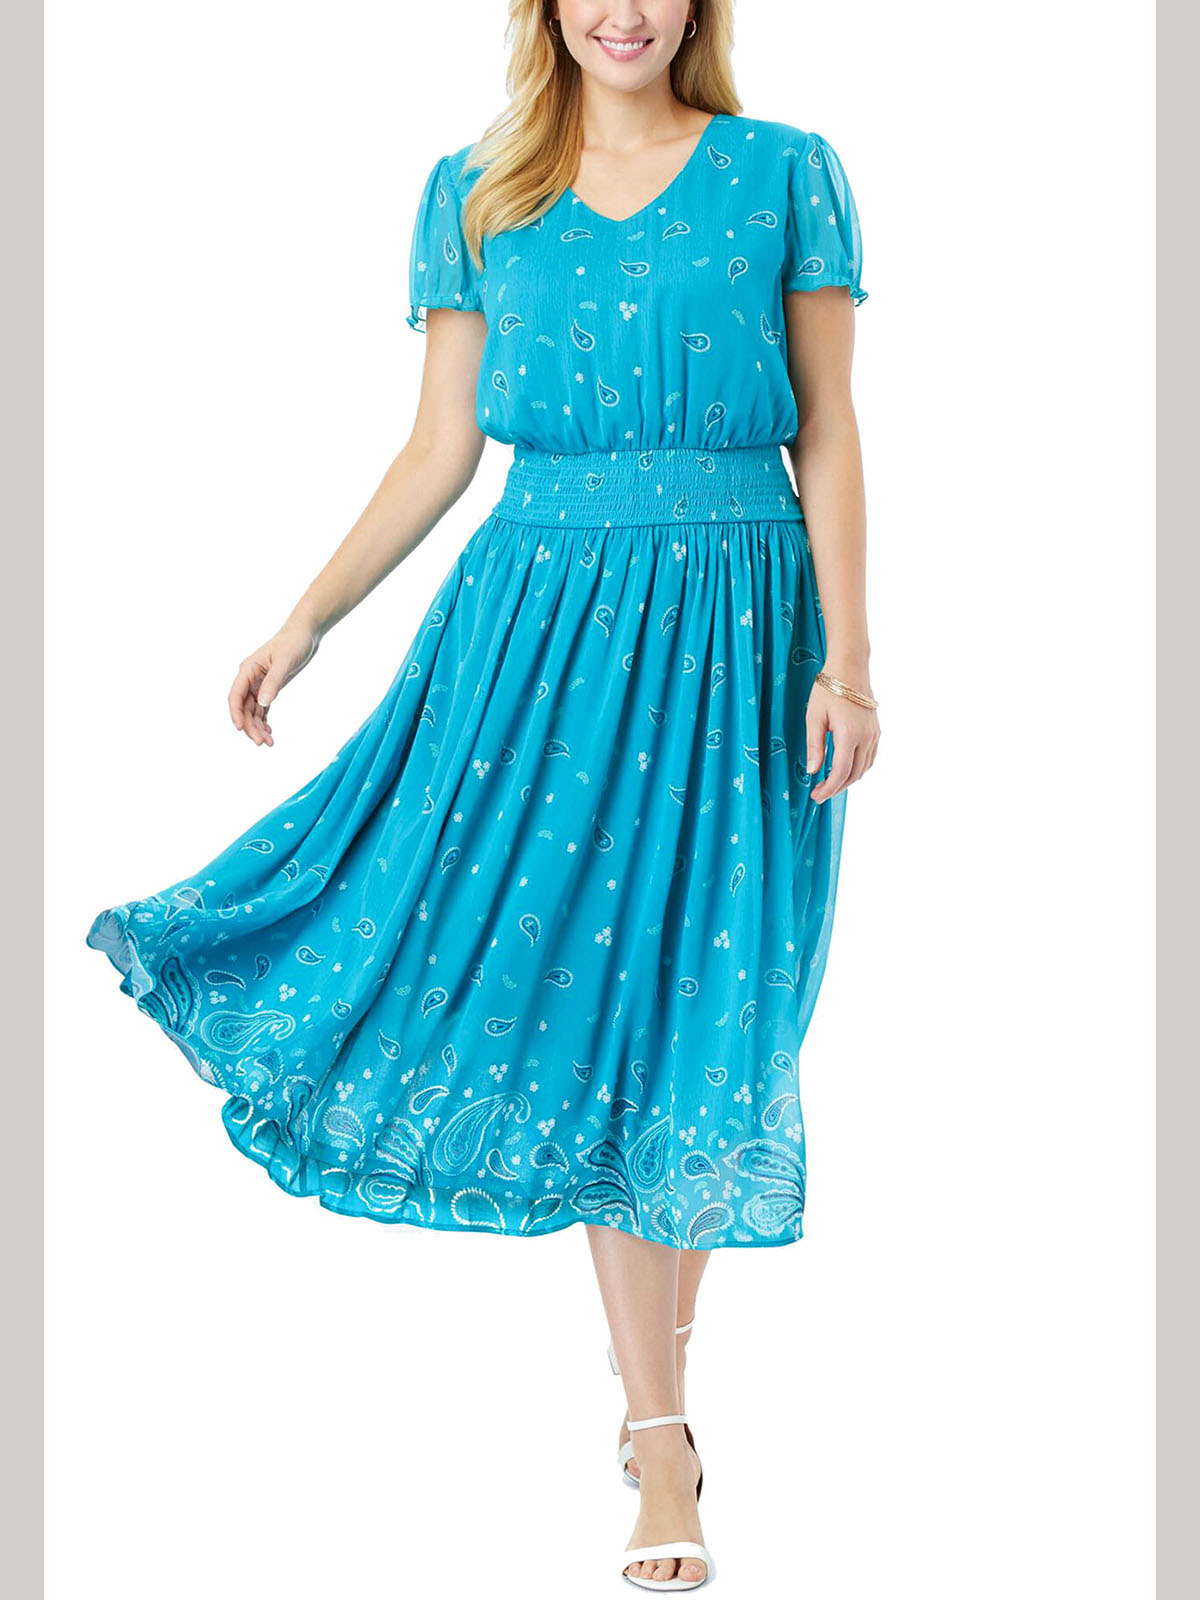 Jessica London - - Jessica London TURQUOISE Paisley Print Smocked Waist  Dress - Plus Size 14 to 30